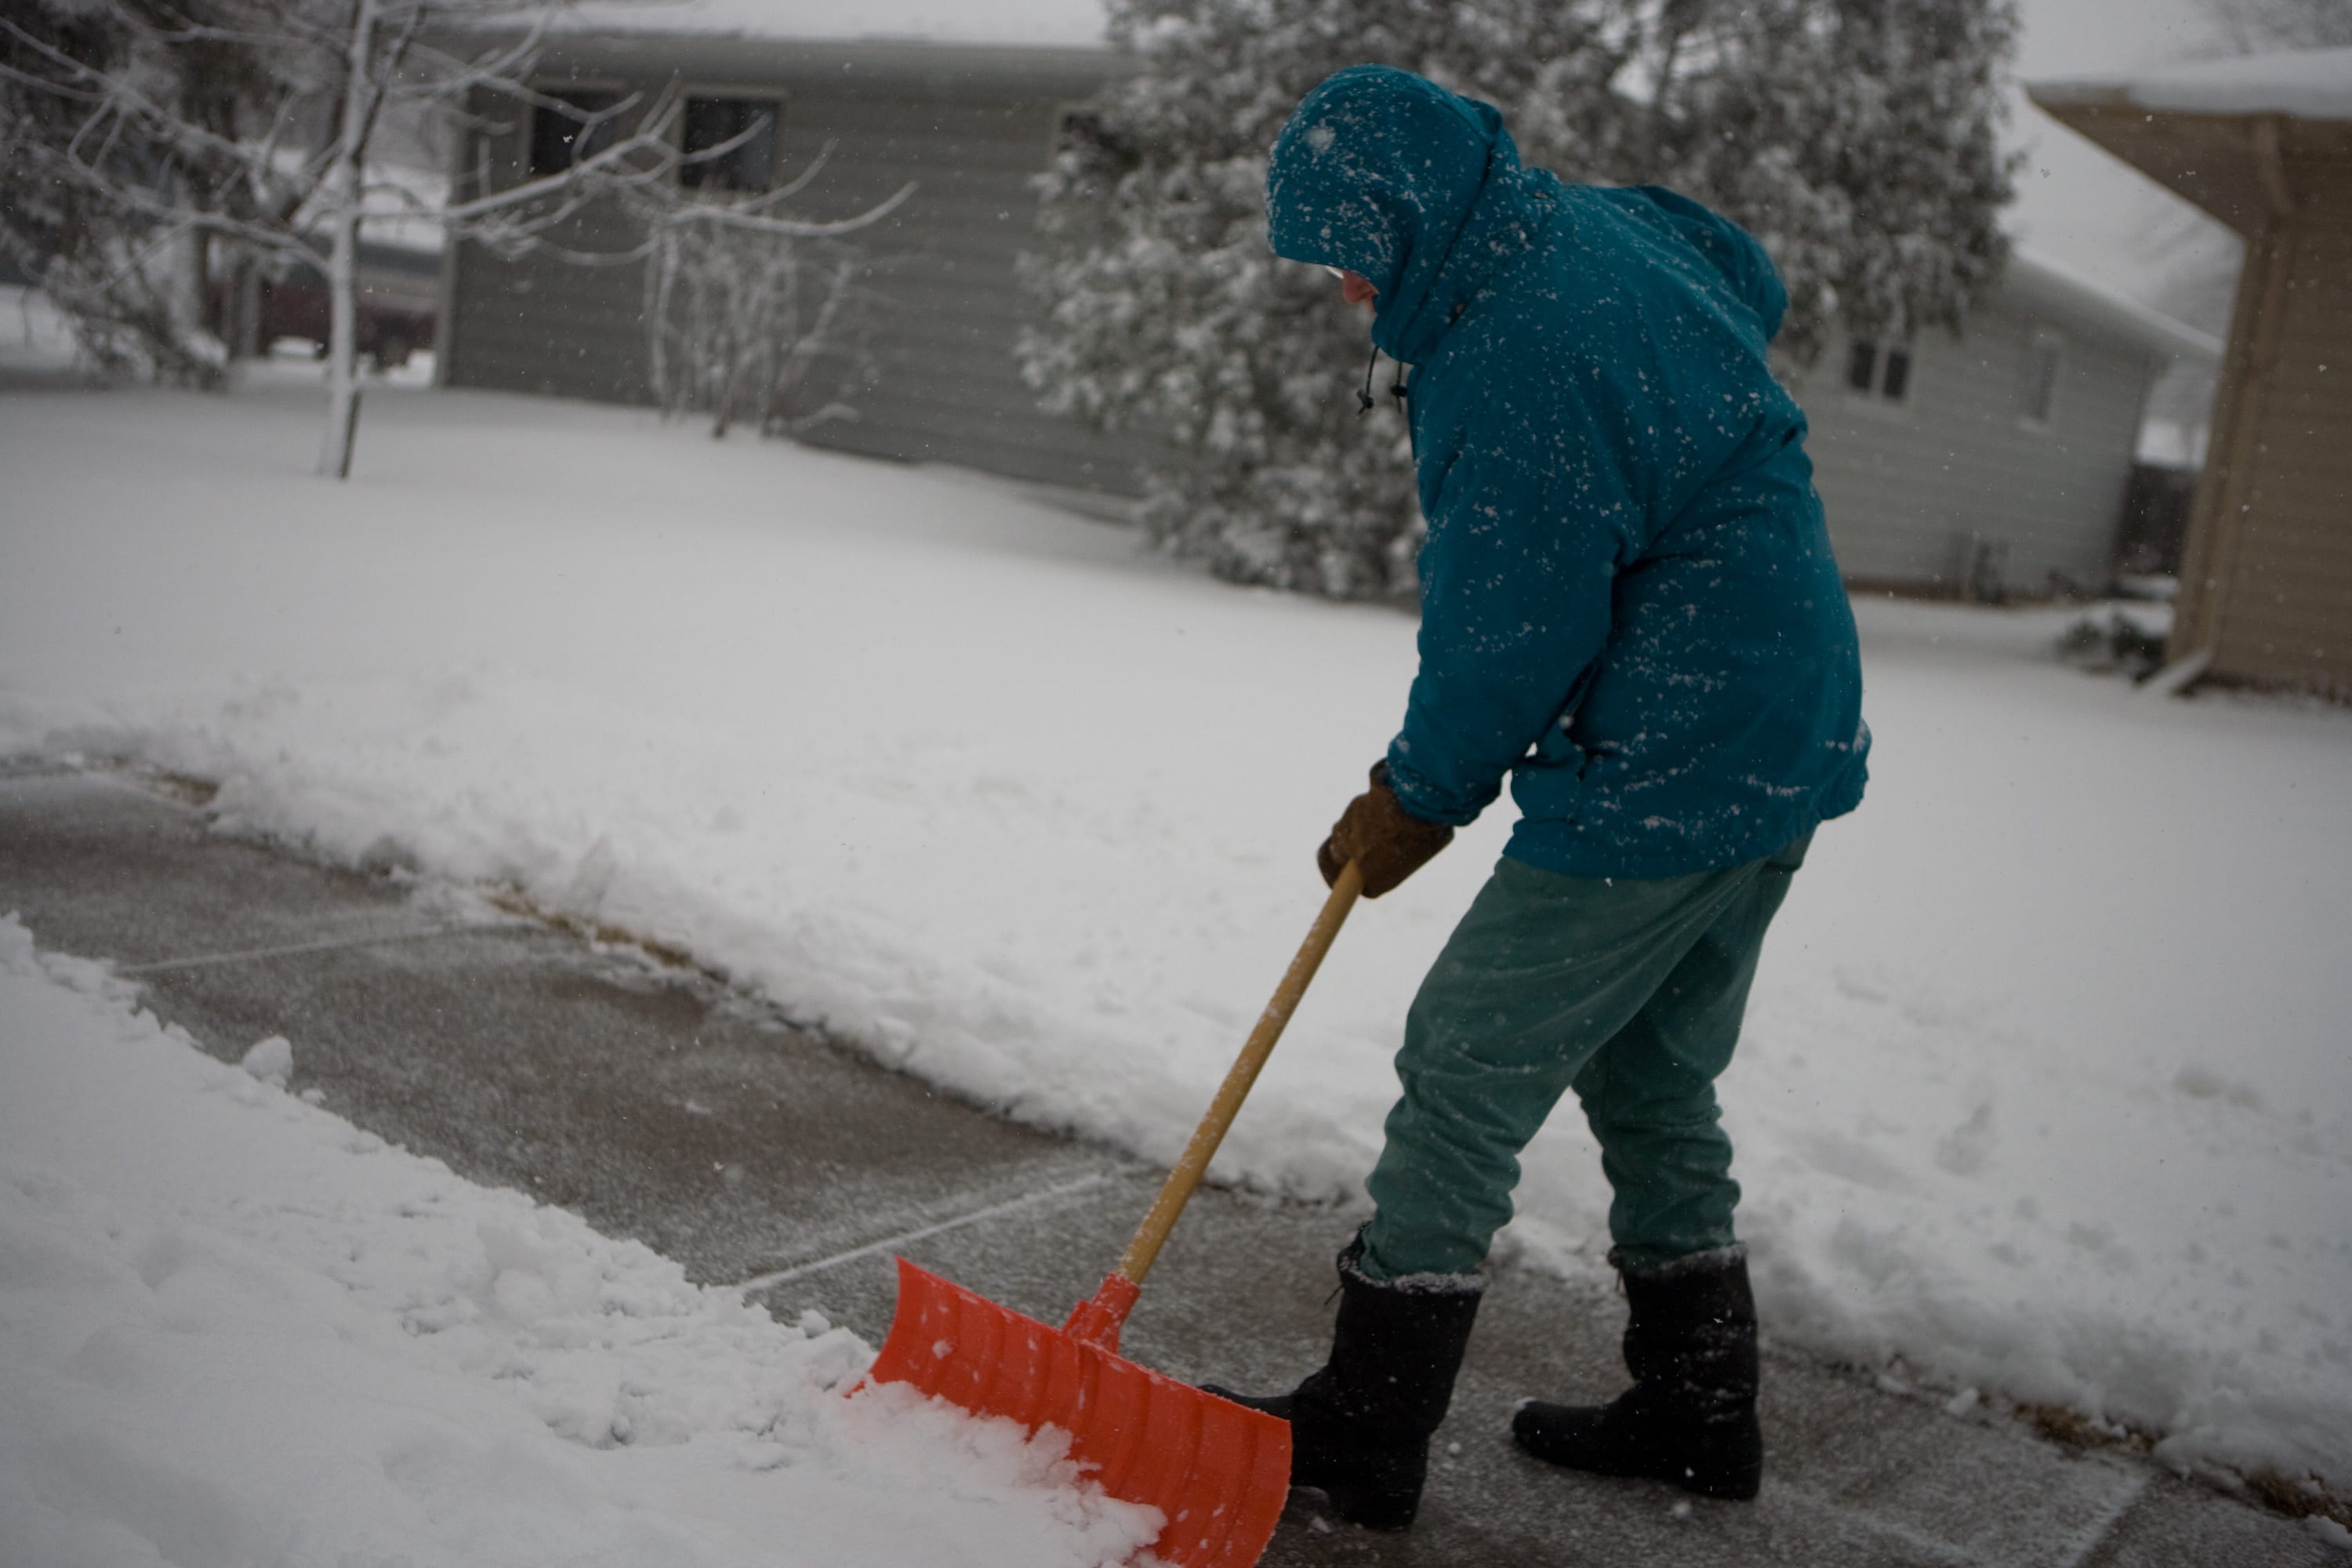 Sidewalk Snow Removal / Snow Shoveling